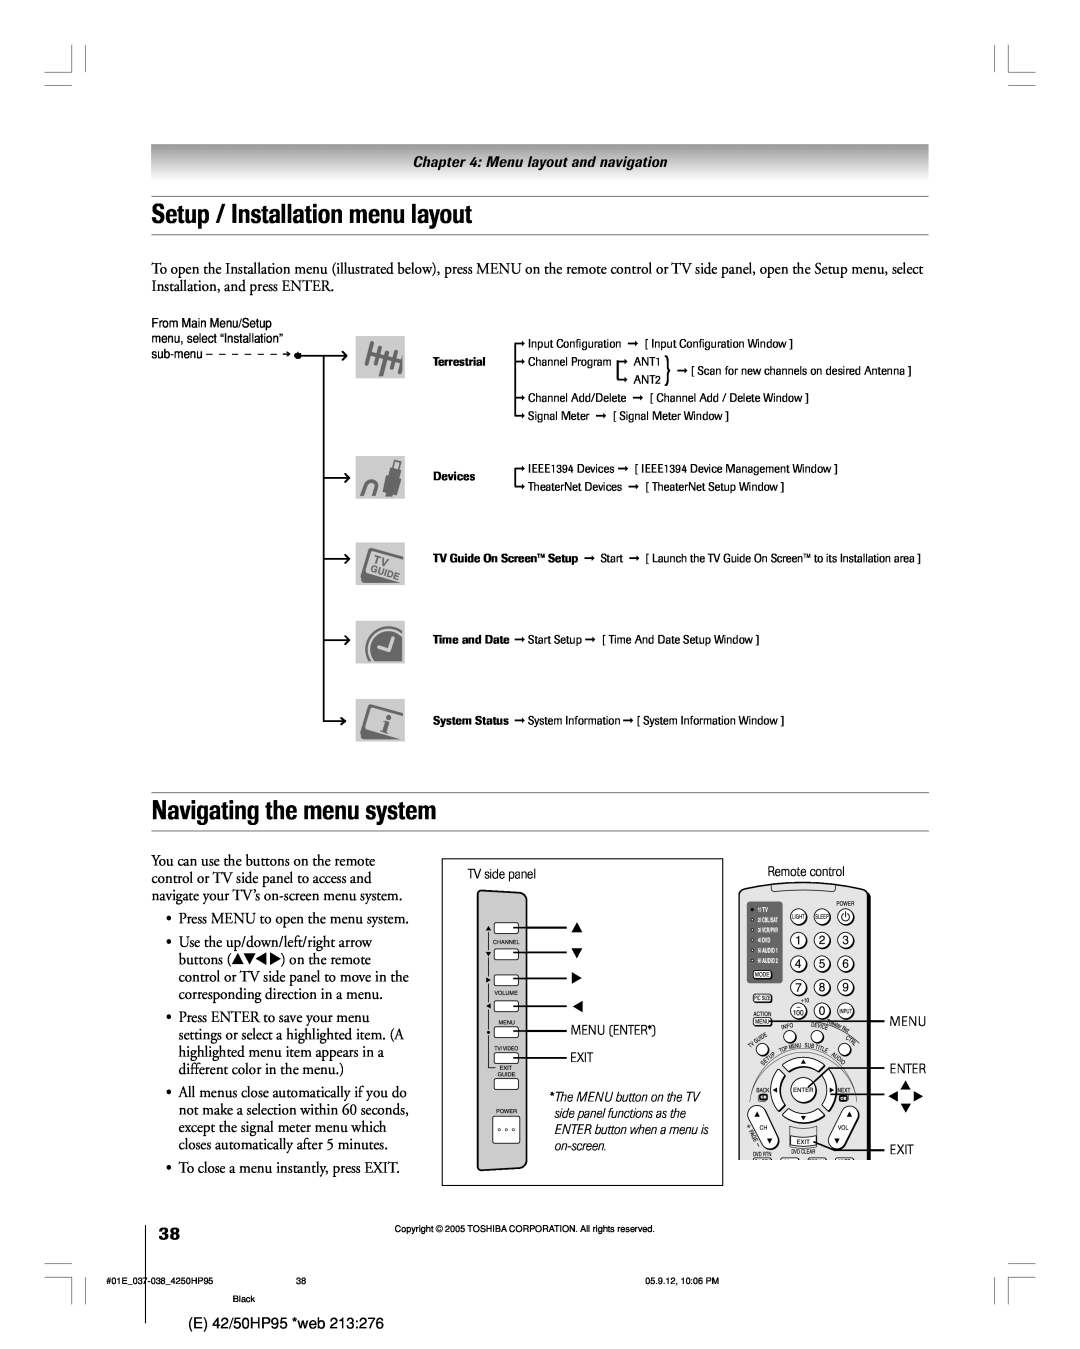 Toshiba 42HP95 Setup / Installation menu layout, Navigating the menu system, Press MENU to open the menu system 